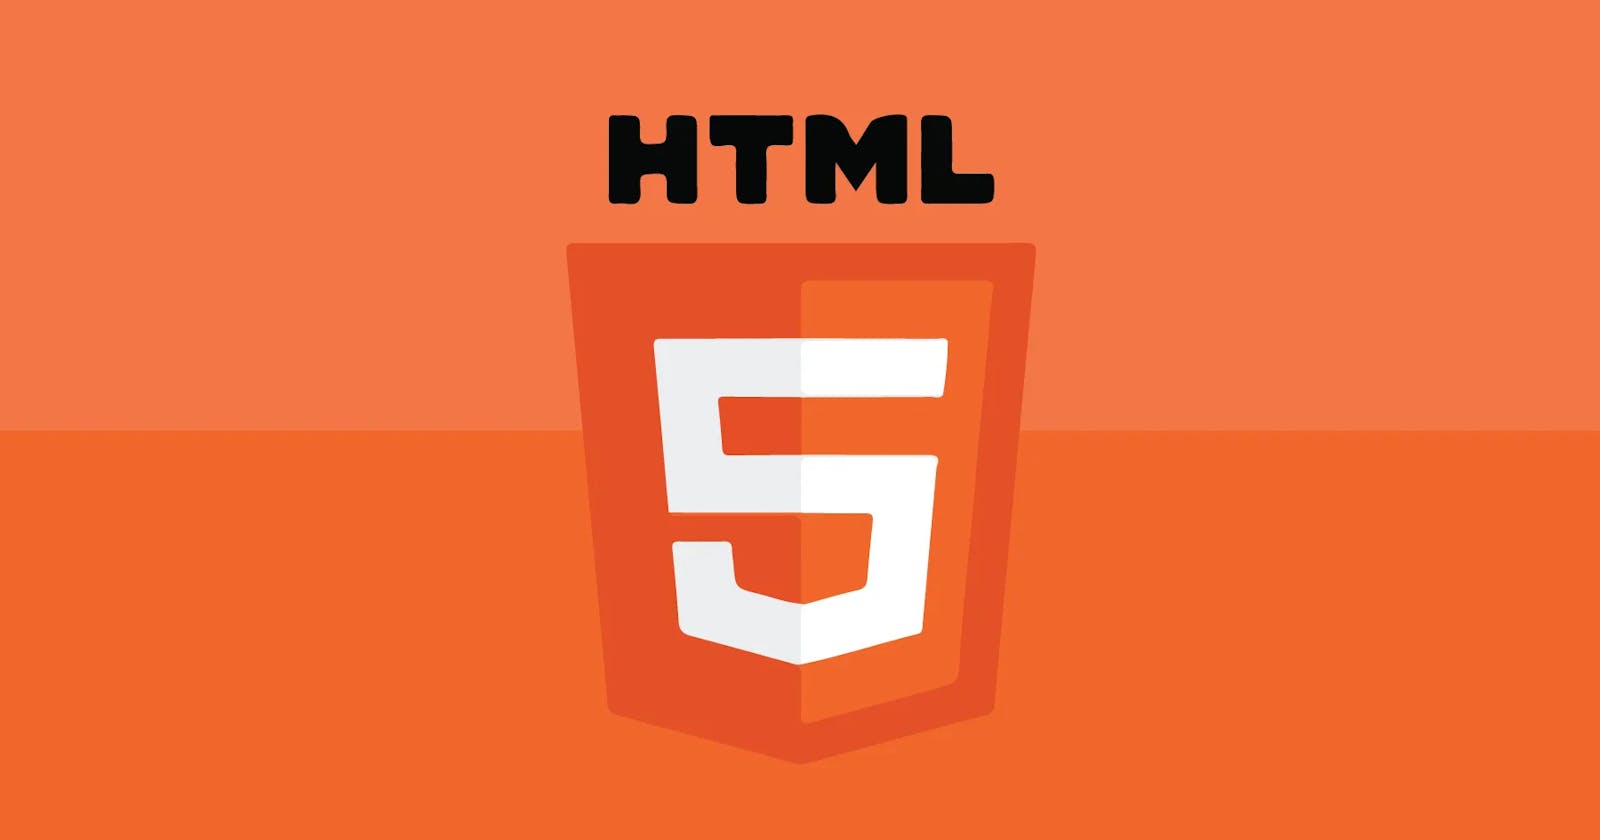 My HTML journey week 1